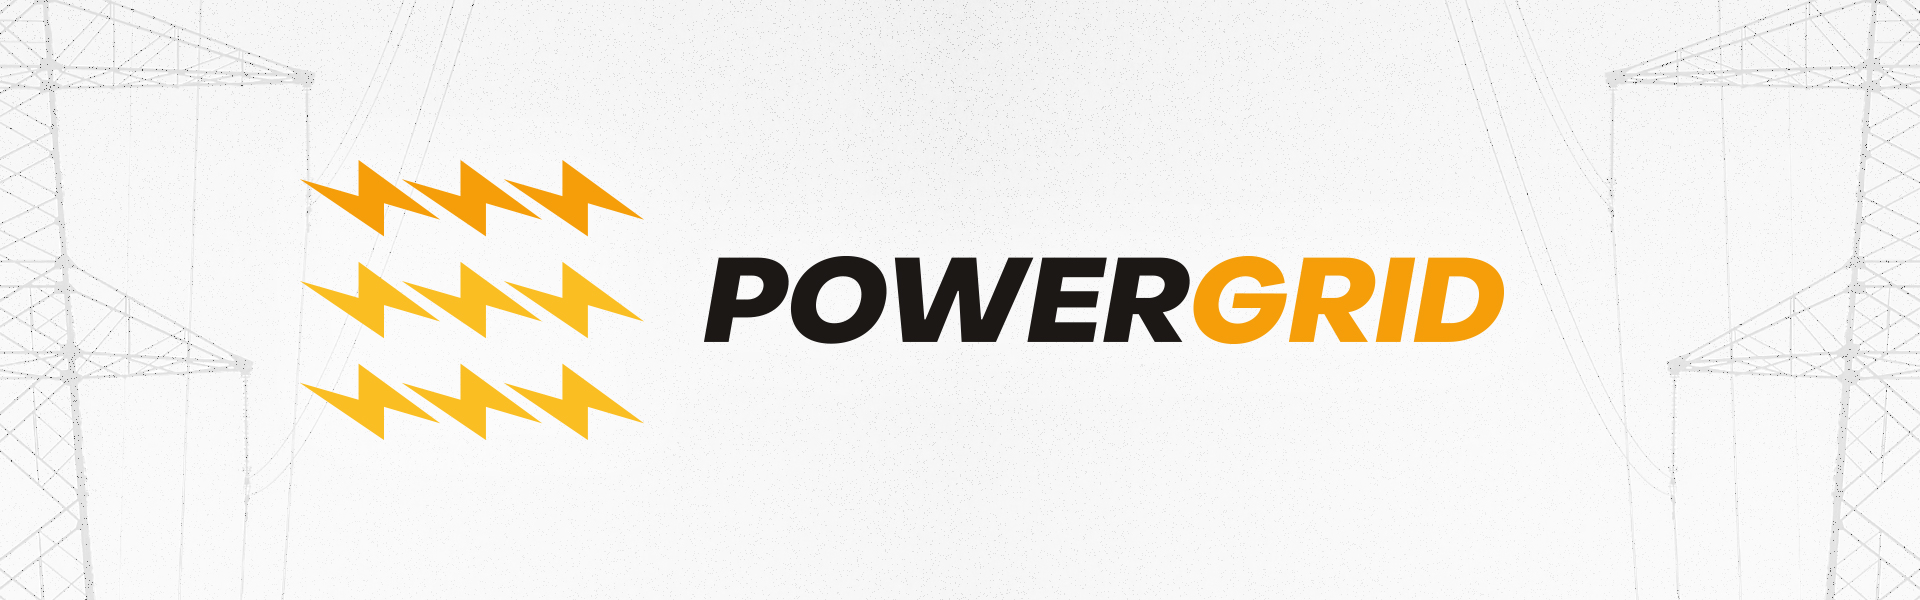 PowerGrid Logo